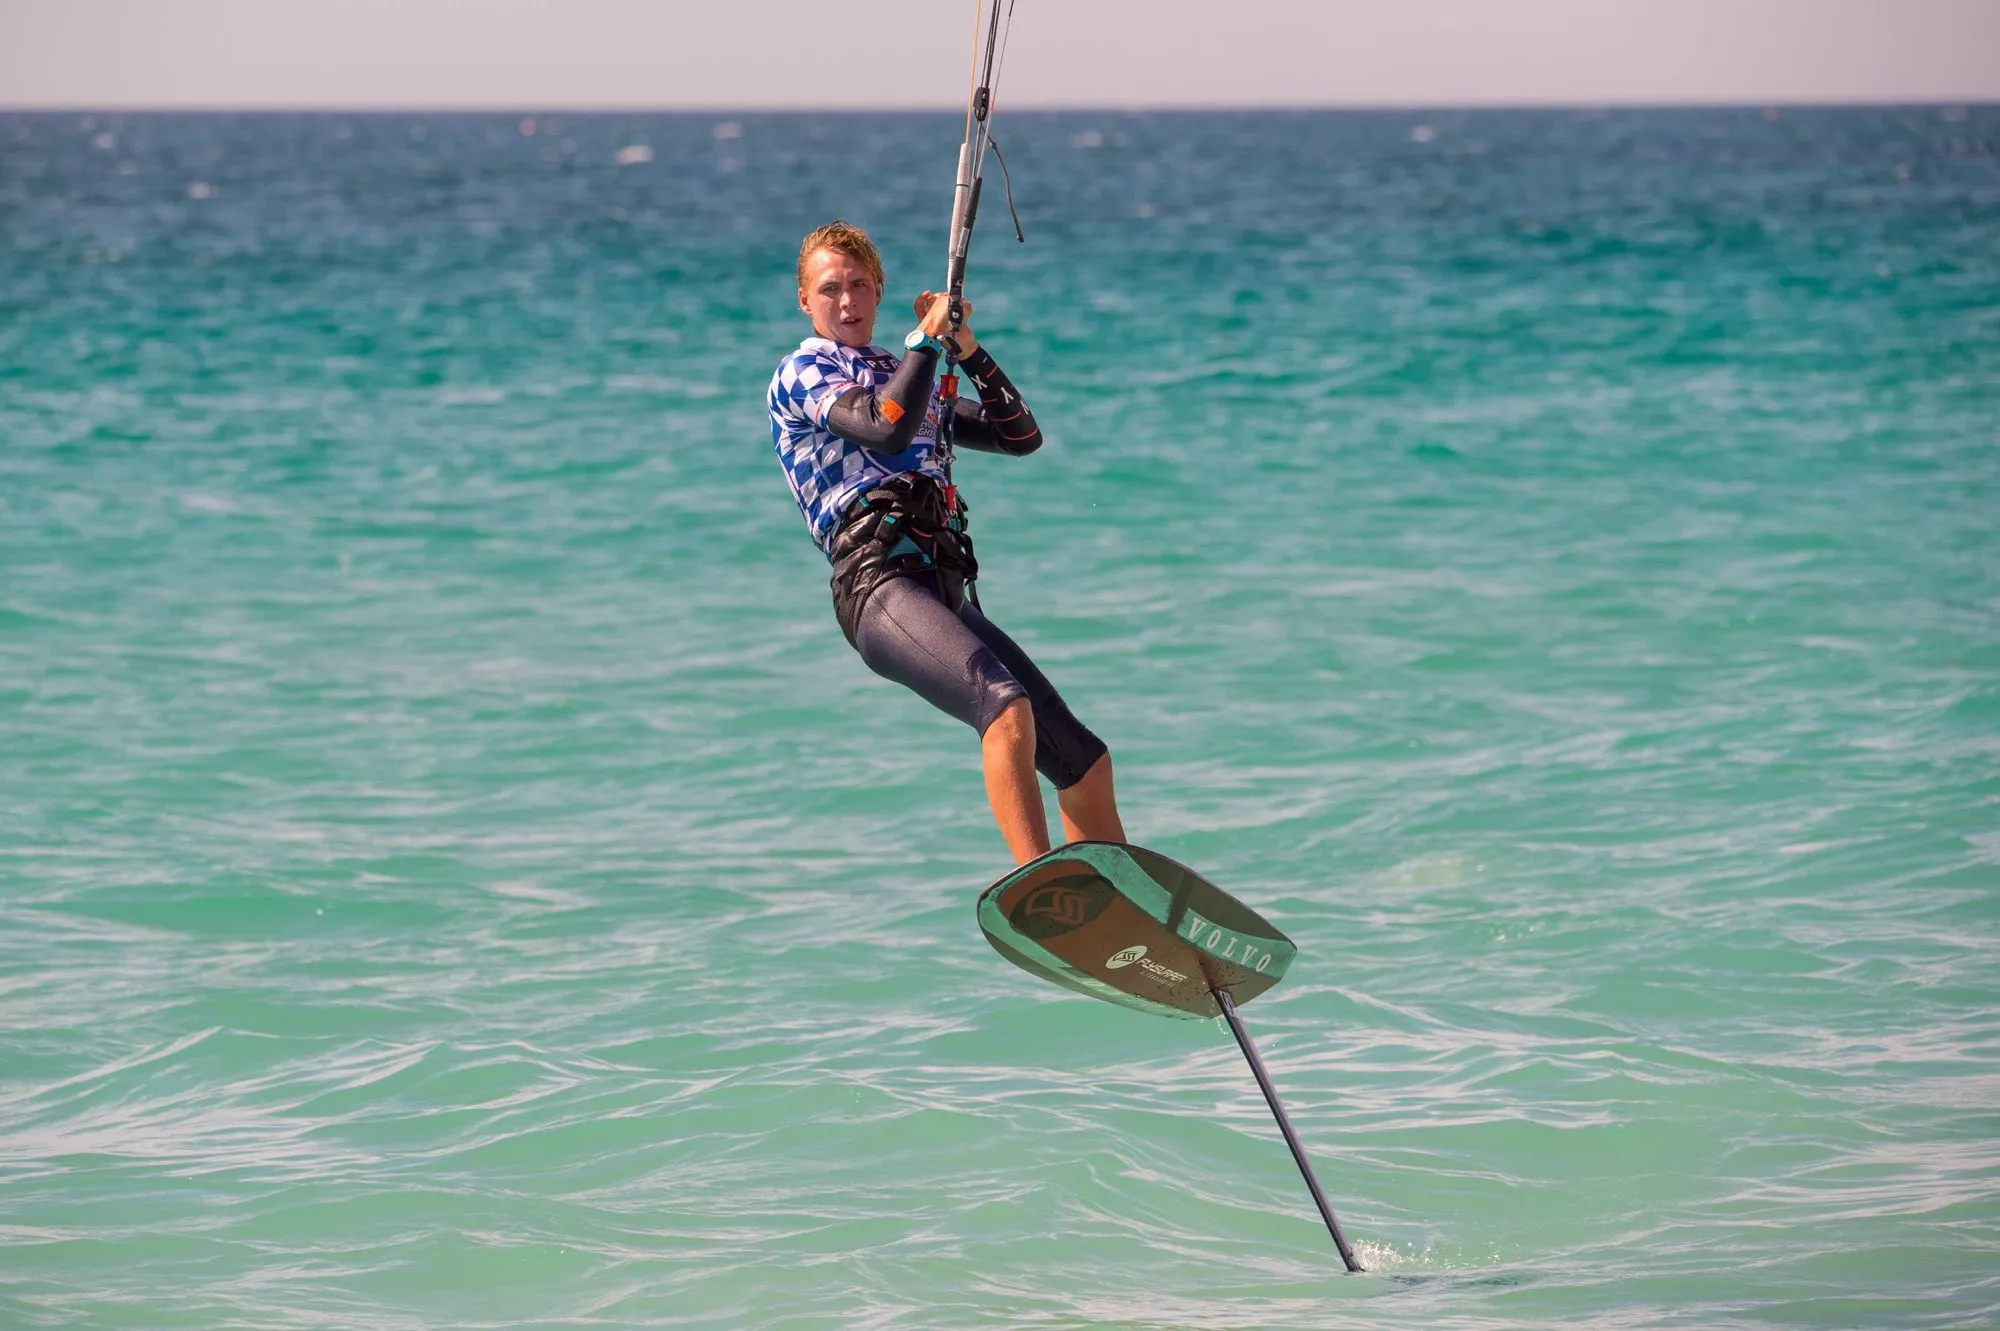 West Oz Kiteboarding in Australia, Australia and Oceania | Kitesurfing - Rated 2